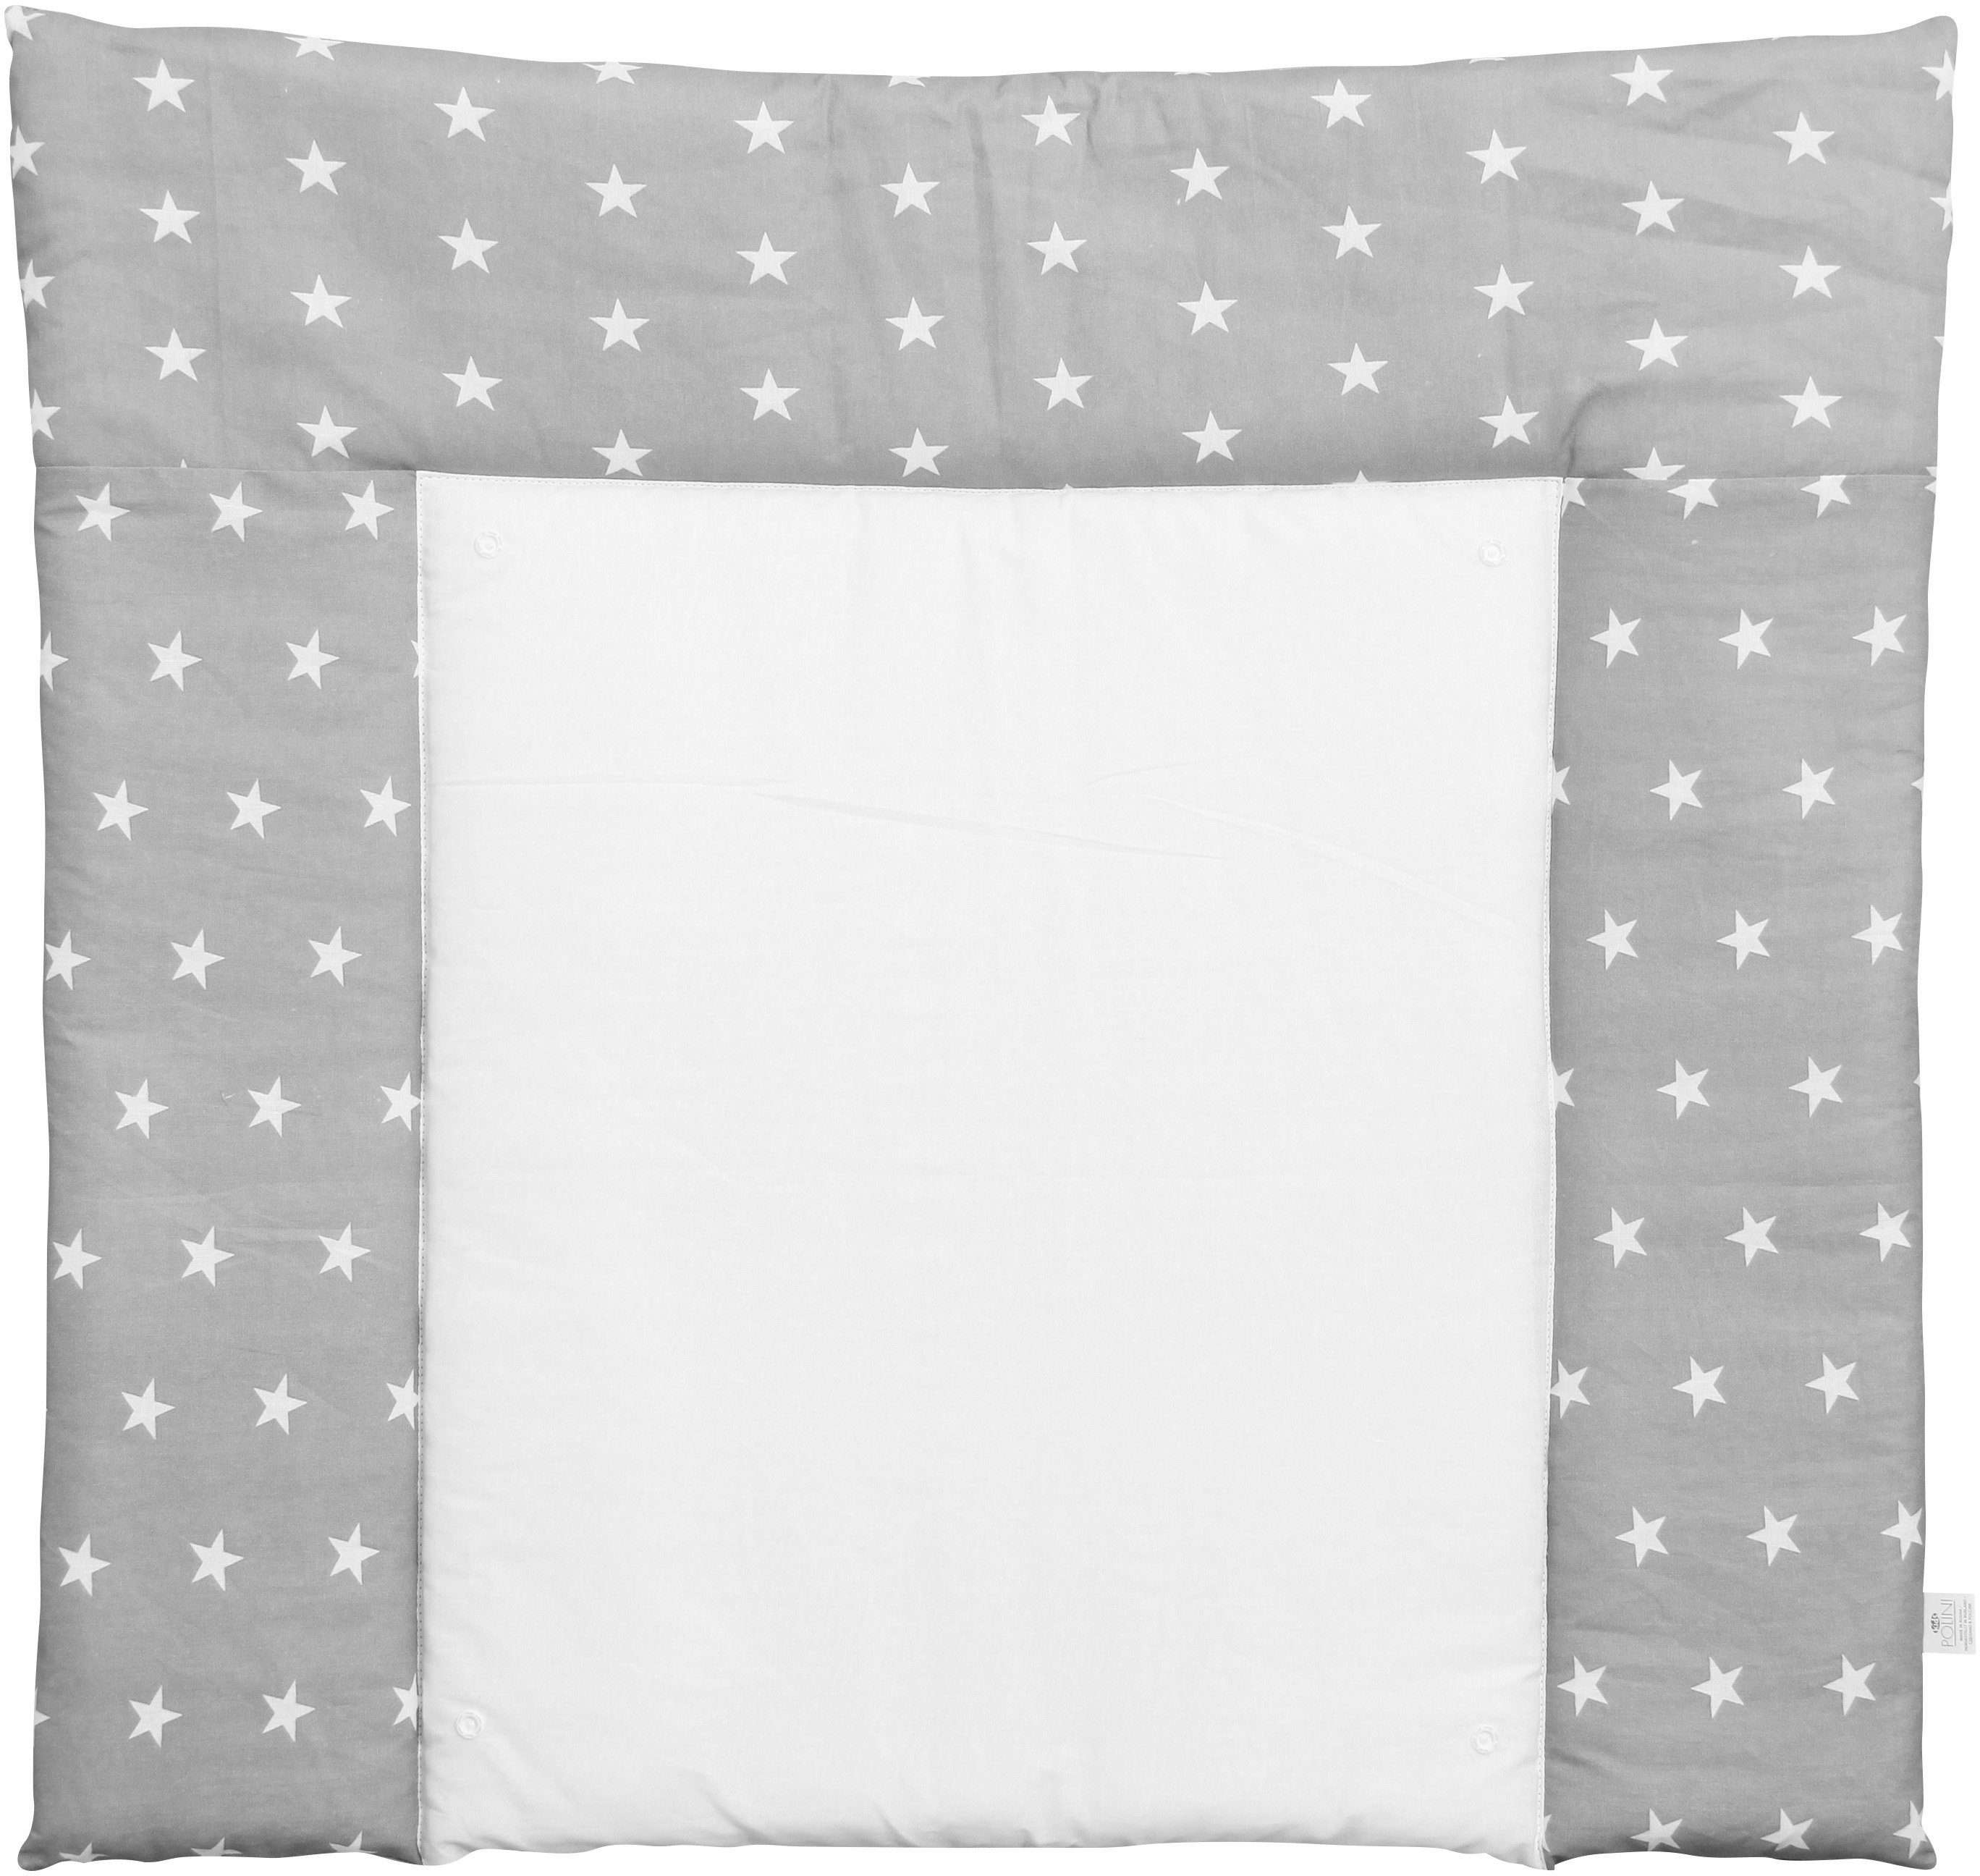 Polini kids Wickelauflage Sterne grau-weiß 77x72 cm, aus Baumwolle